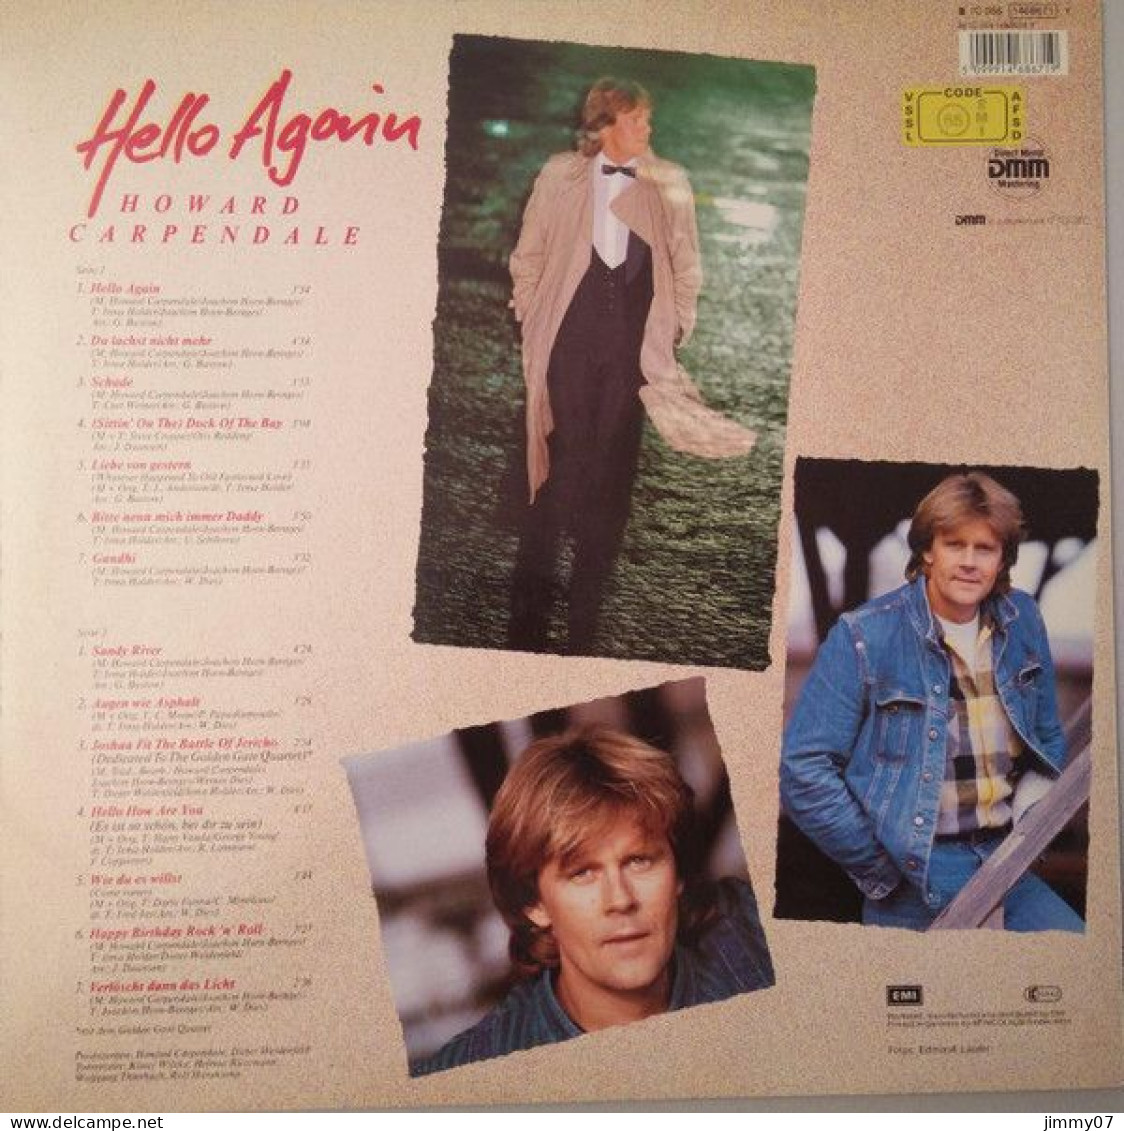 Howard Carpendale - Hello Again (LP, Album) - Other - German Music